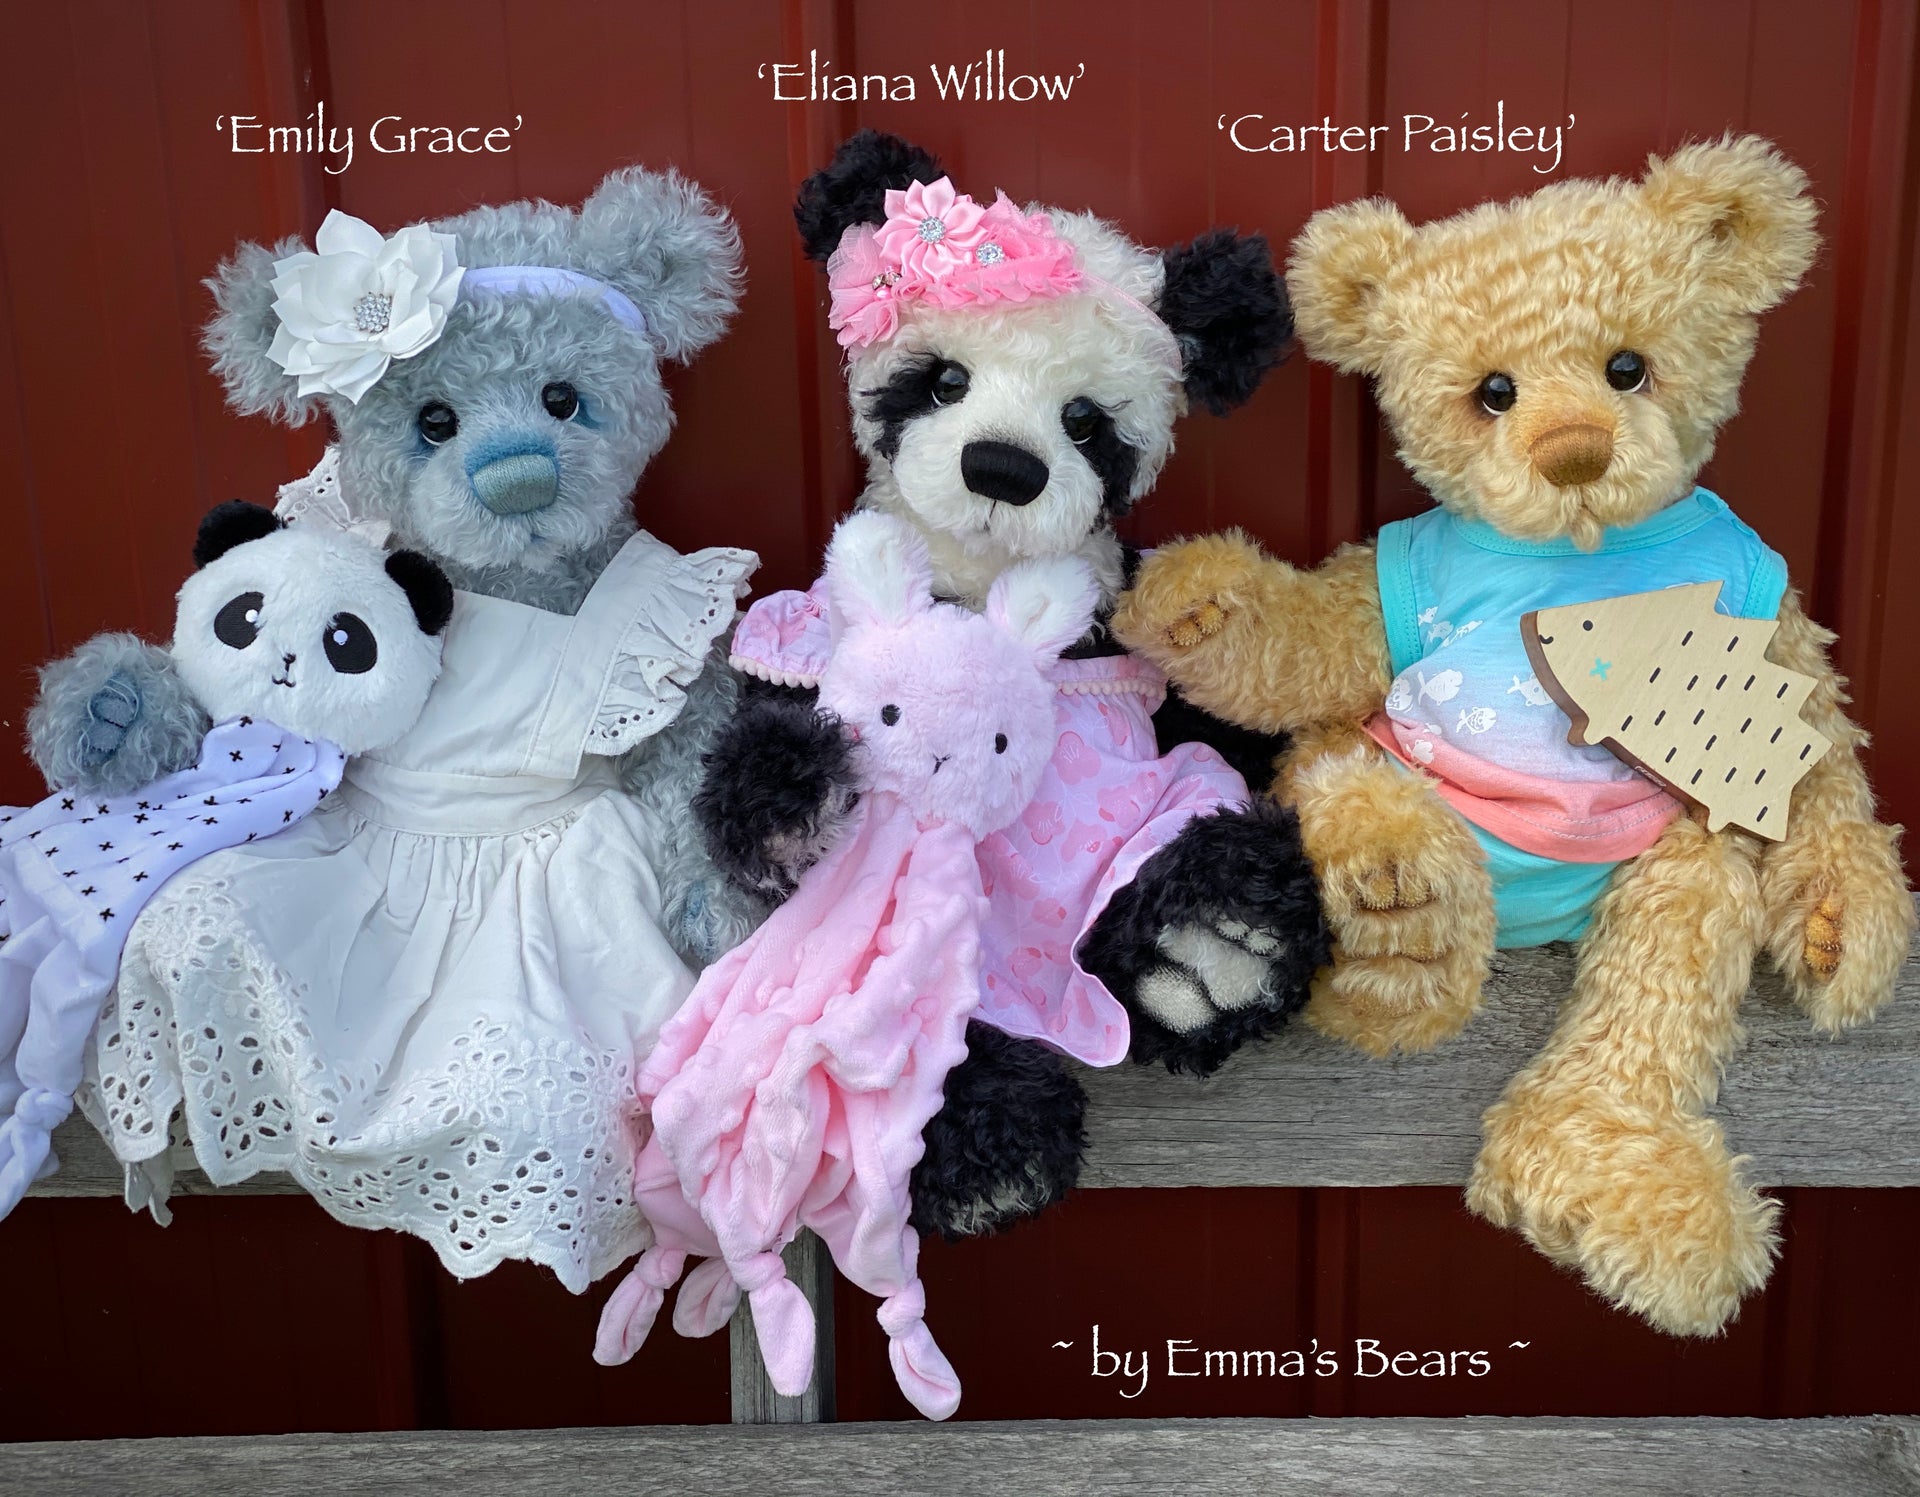 Carter Paisley - 18" Baby Artist Bear by Emma's Bears - OOAK